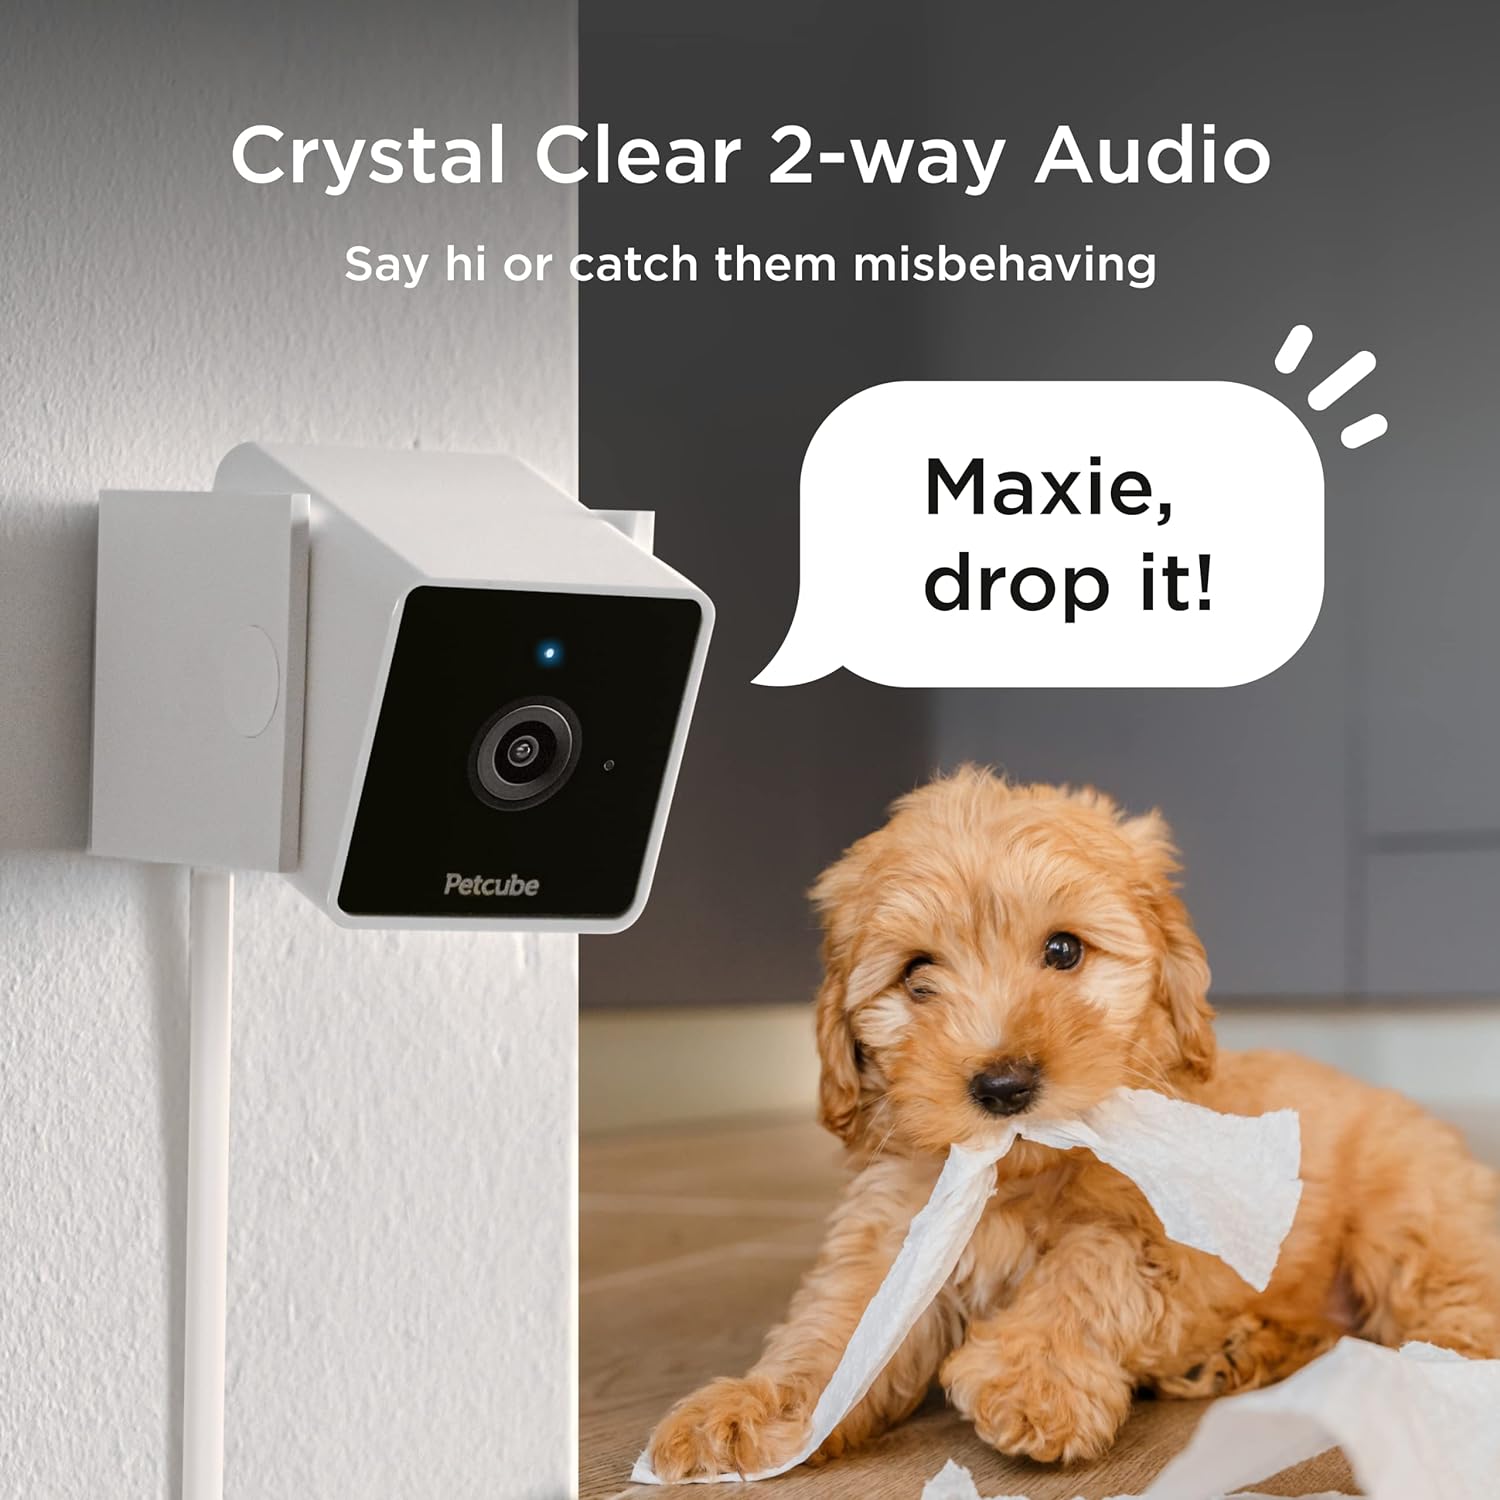 Petcube Cam Indoor Wi-Fi Pet and Security Camera with Phone App - $30